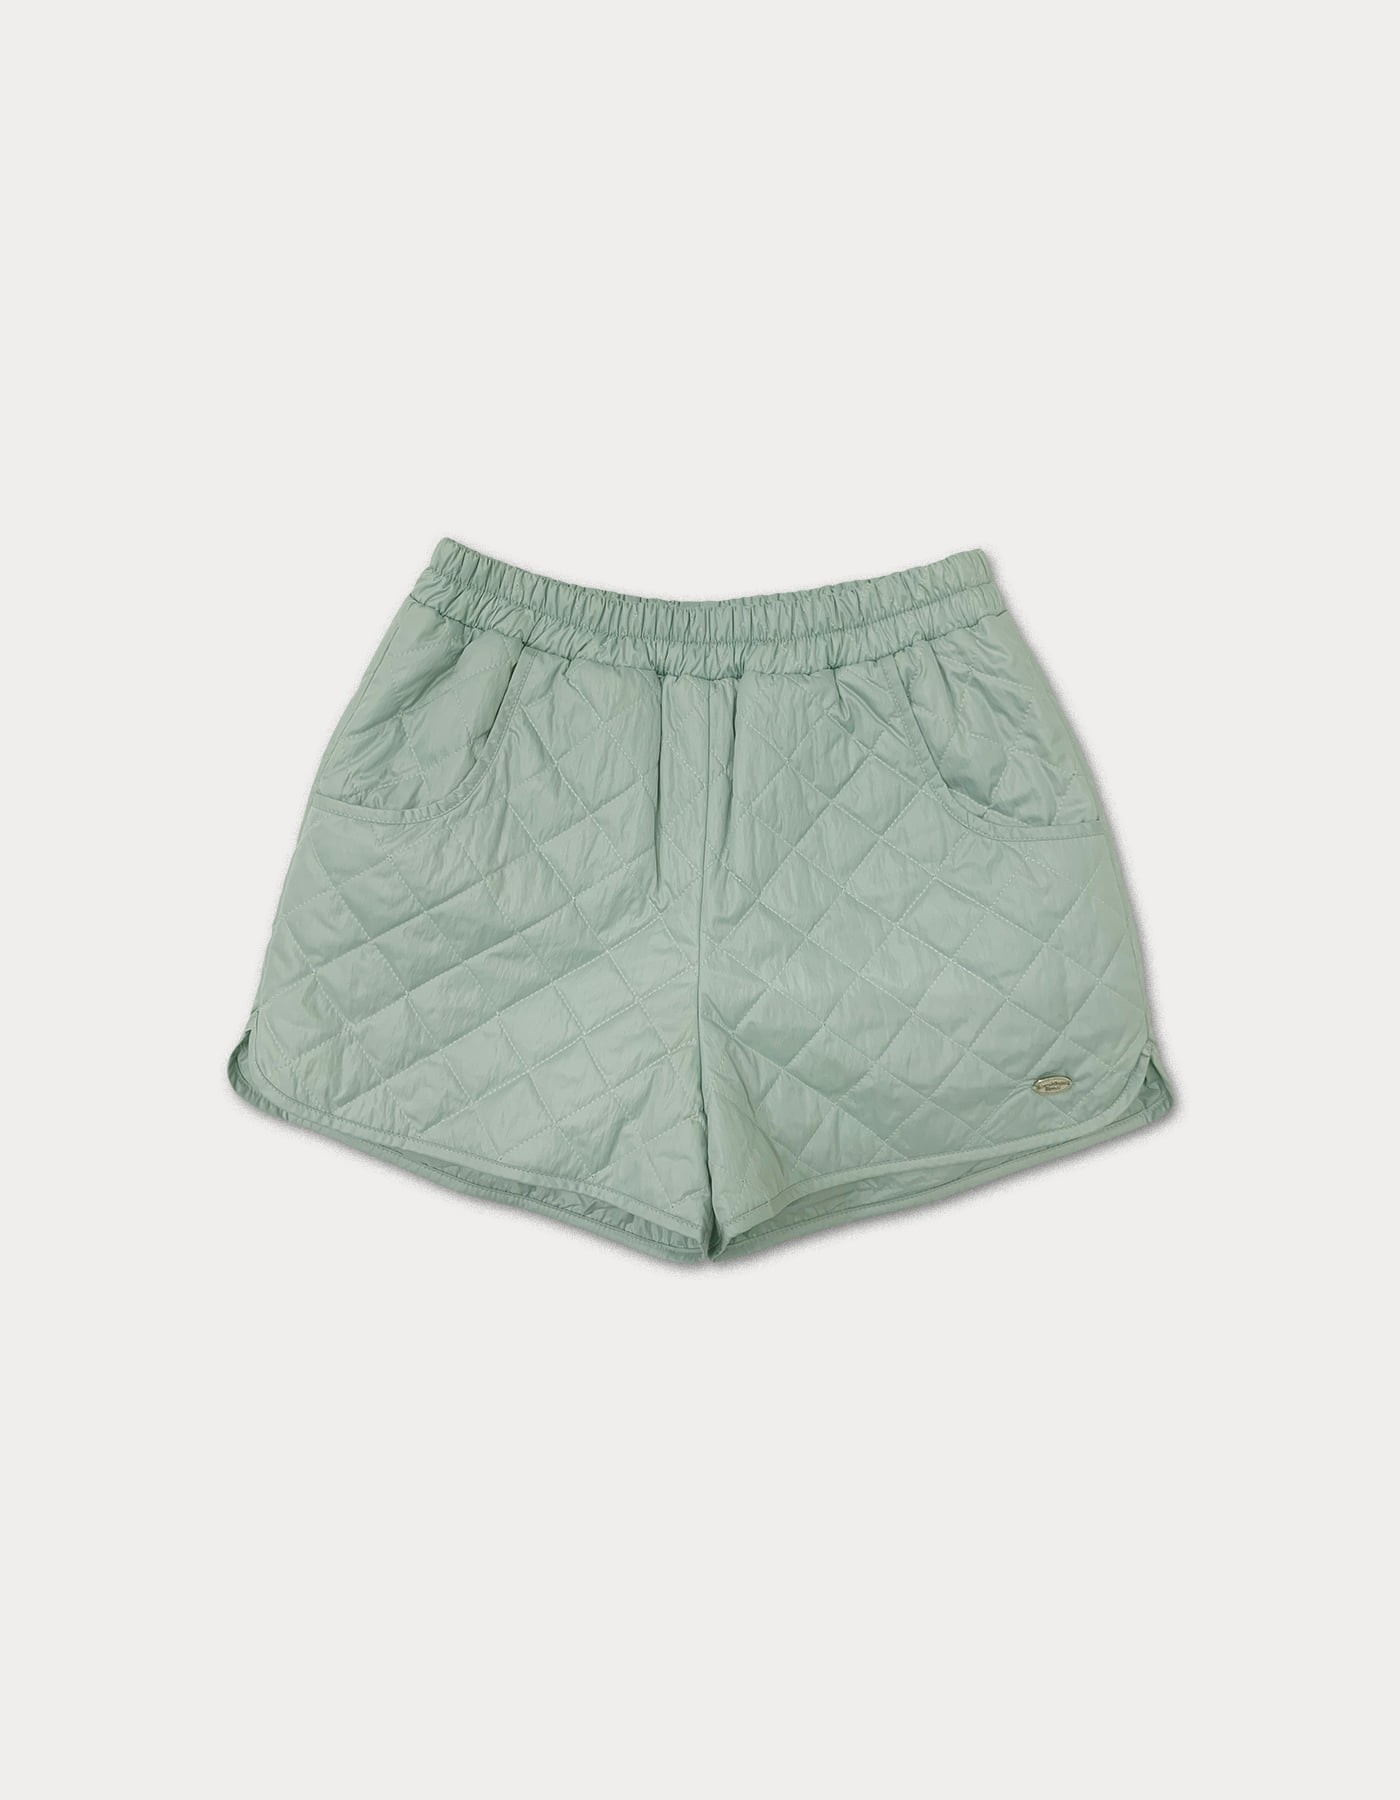 Pendant quilting shorts - mint